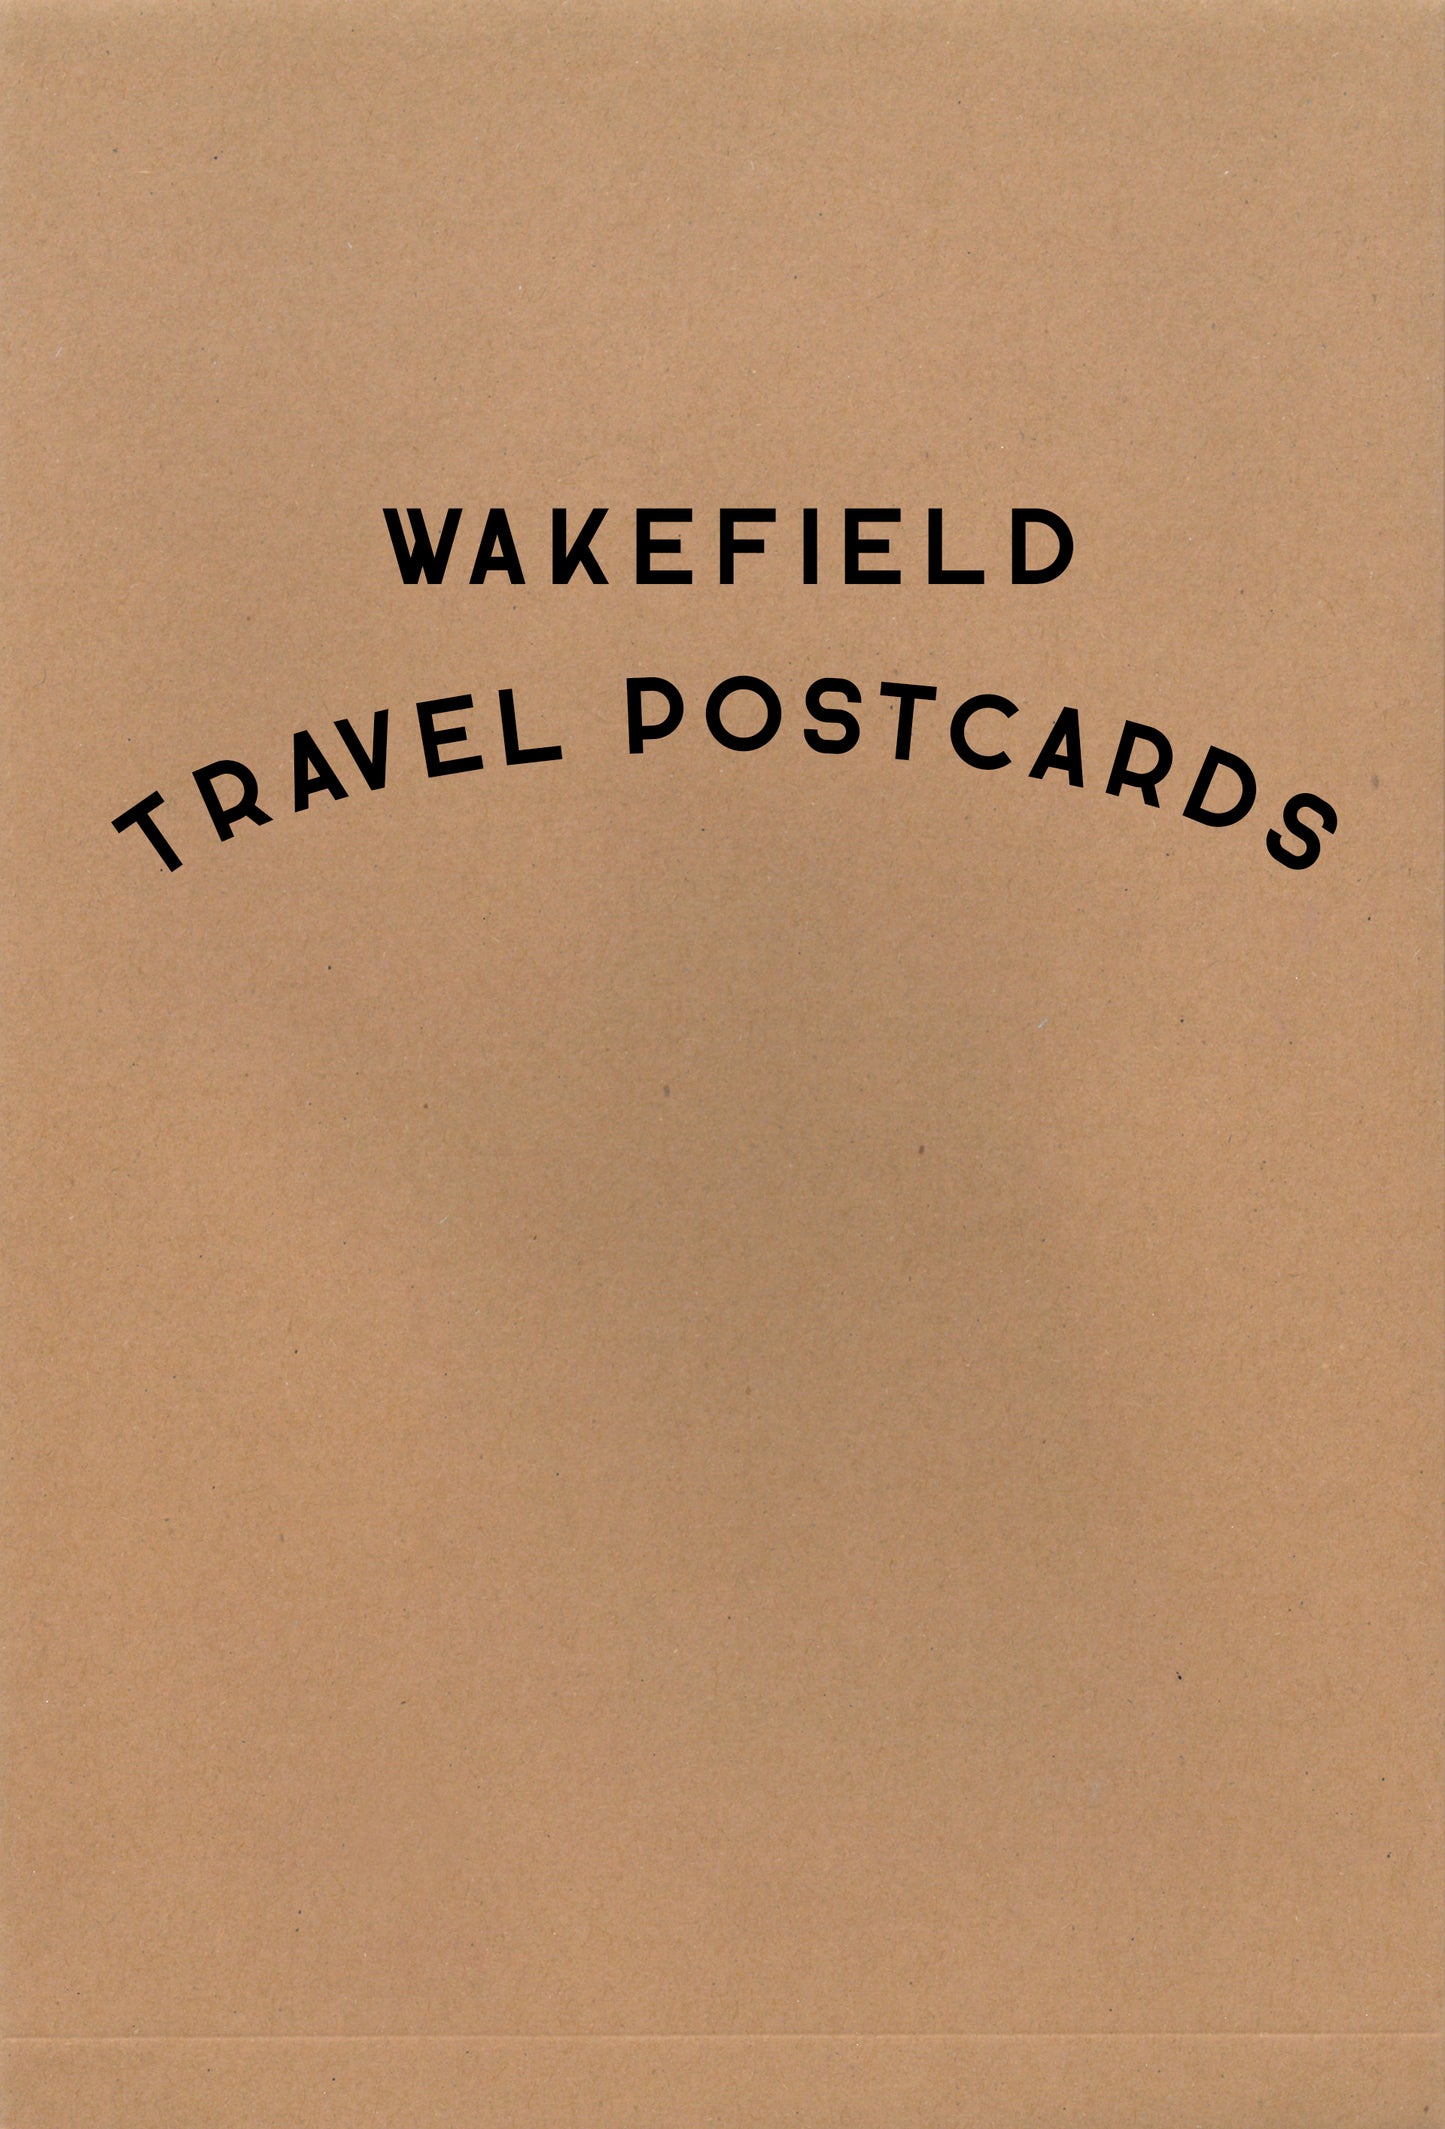 Wakefield Travel Postcards by Ellie Way